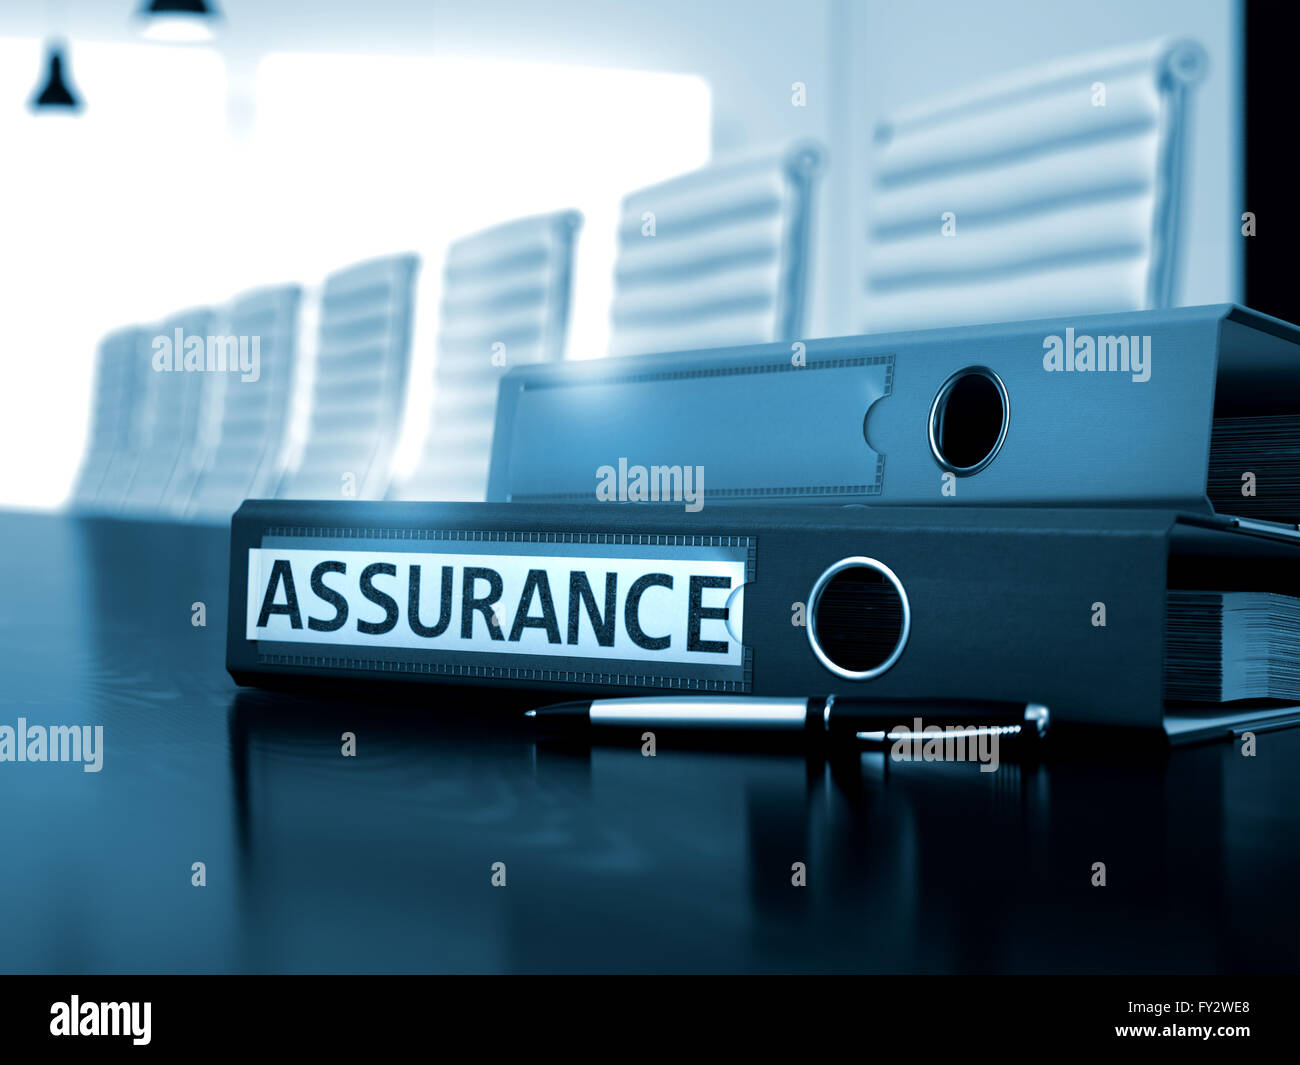 Assurance on Ring Binder. Blurred Image. Stock Photo